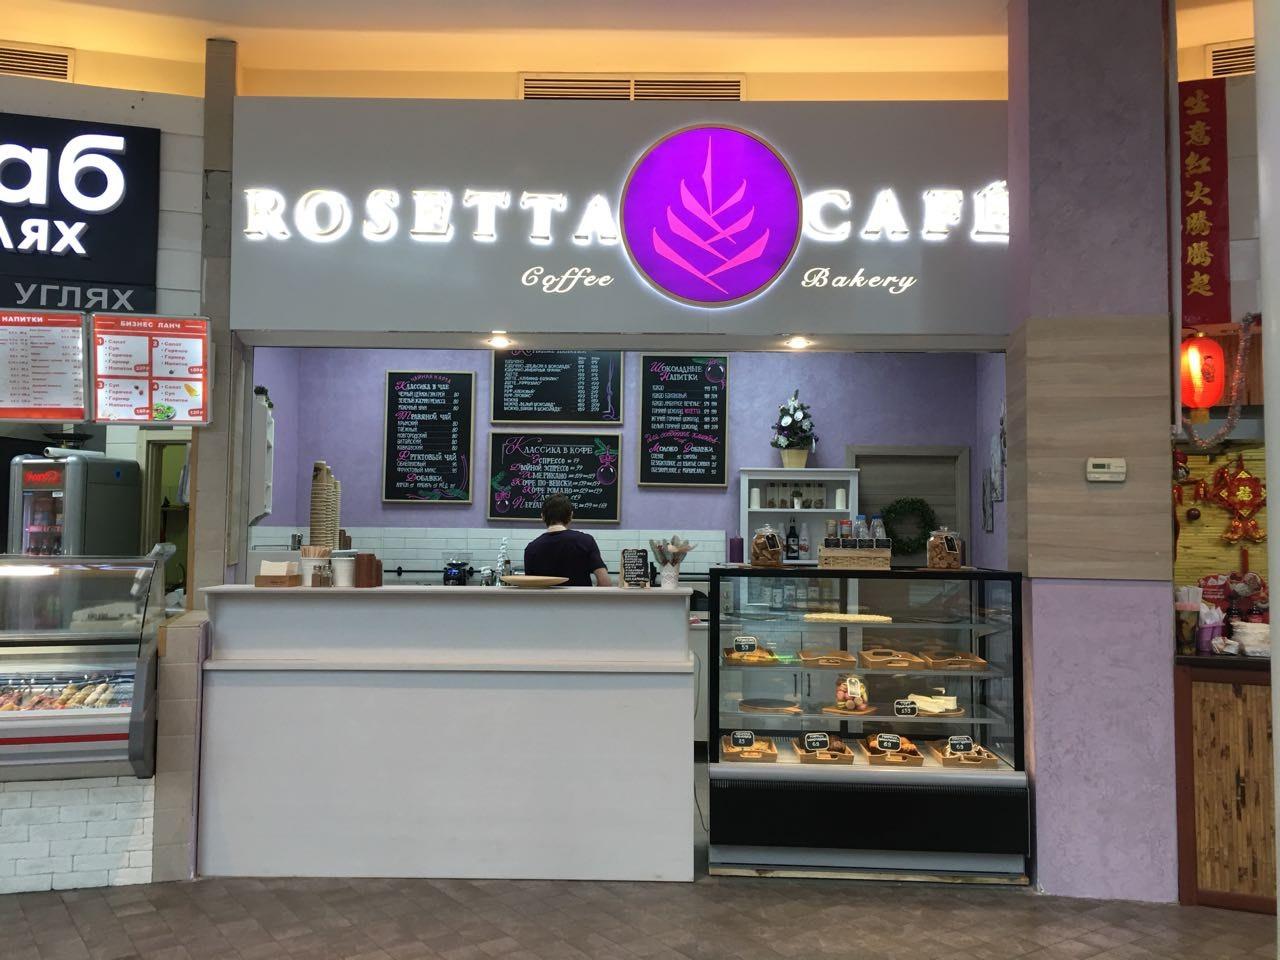 Rosetta Cafe